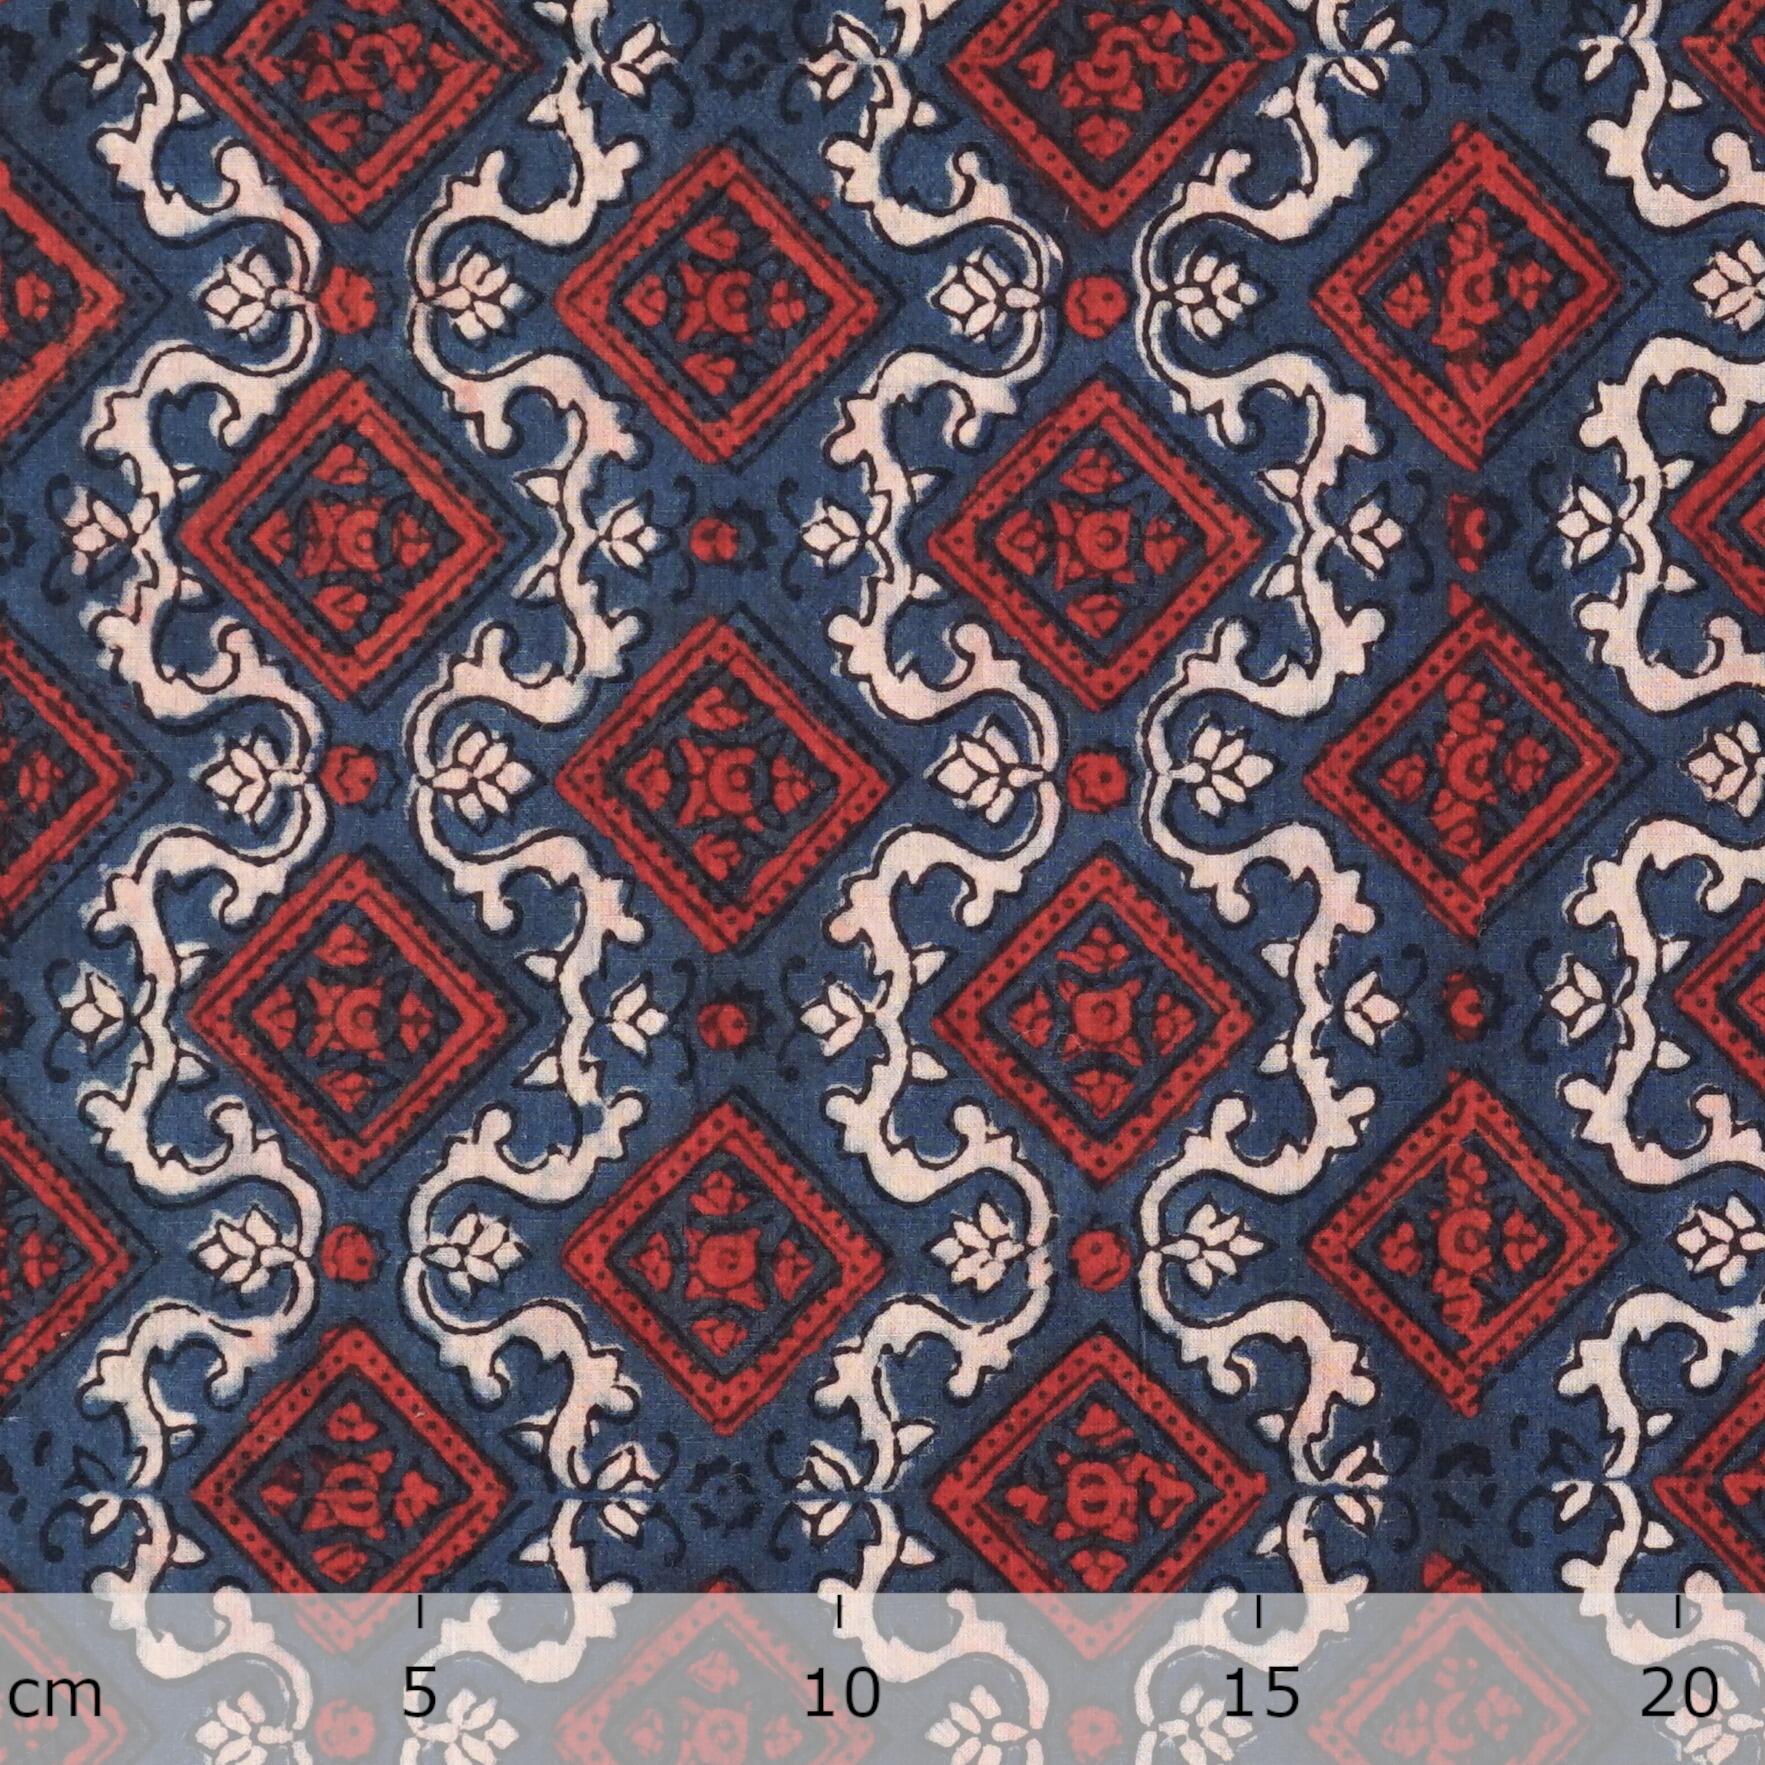 Block Printed Fabric, 100% Cotton, Ajrak Design: Blue Base, White Vine, Red Square. Ruler